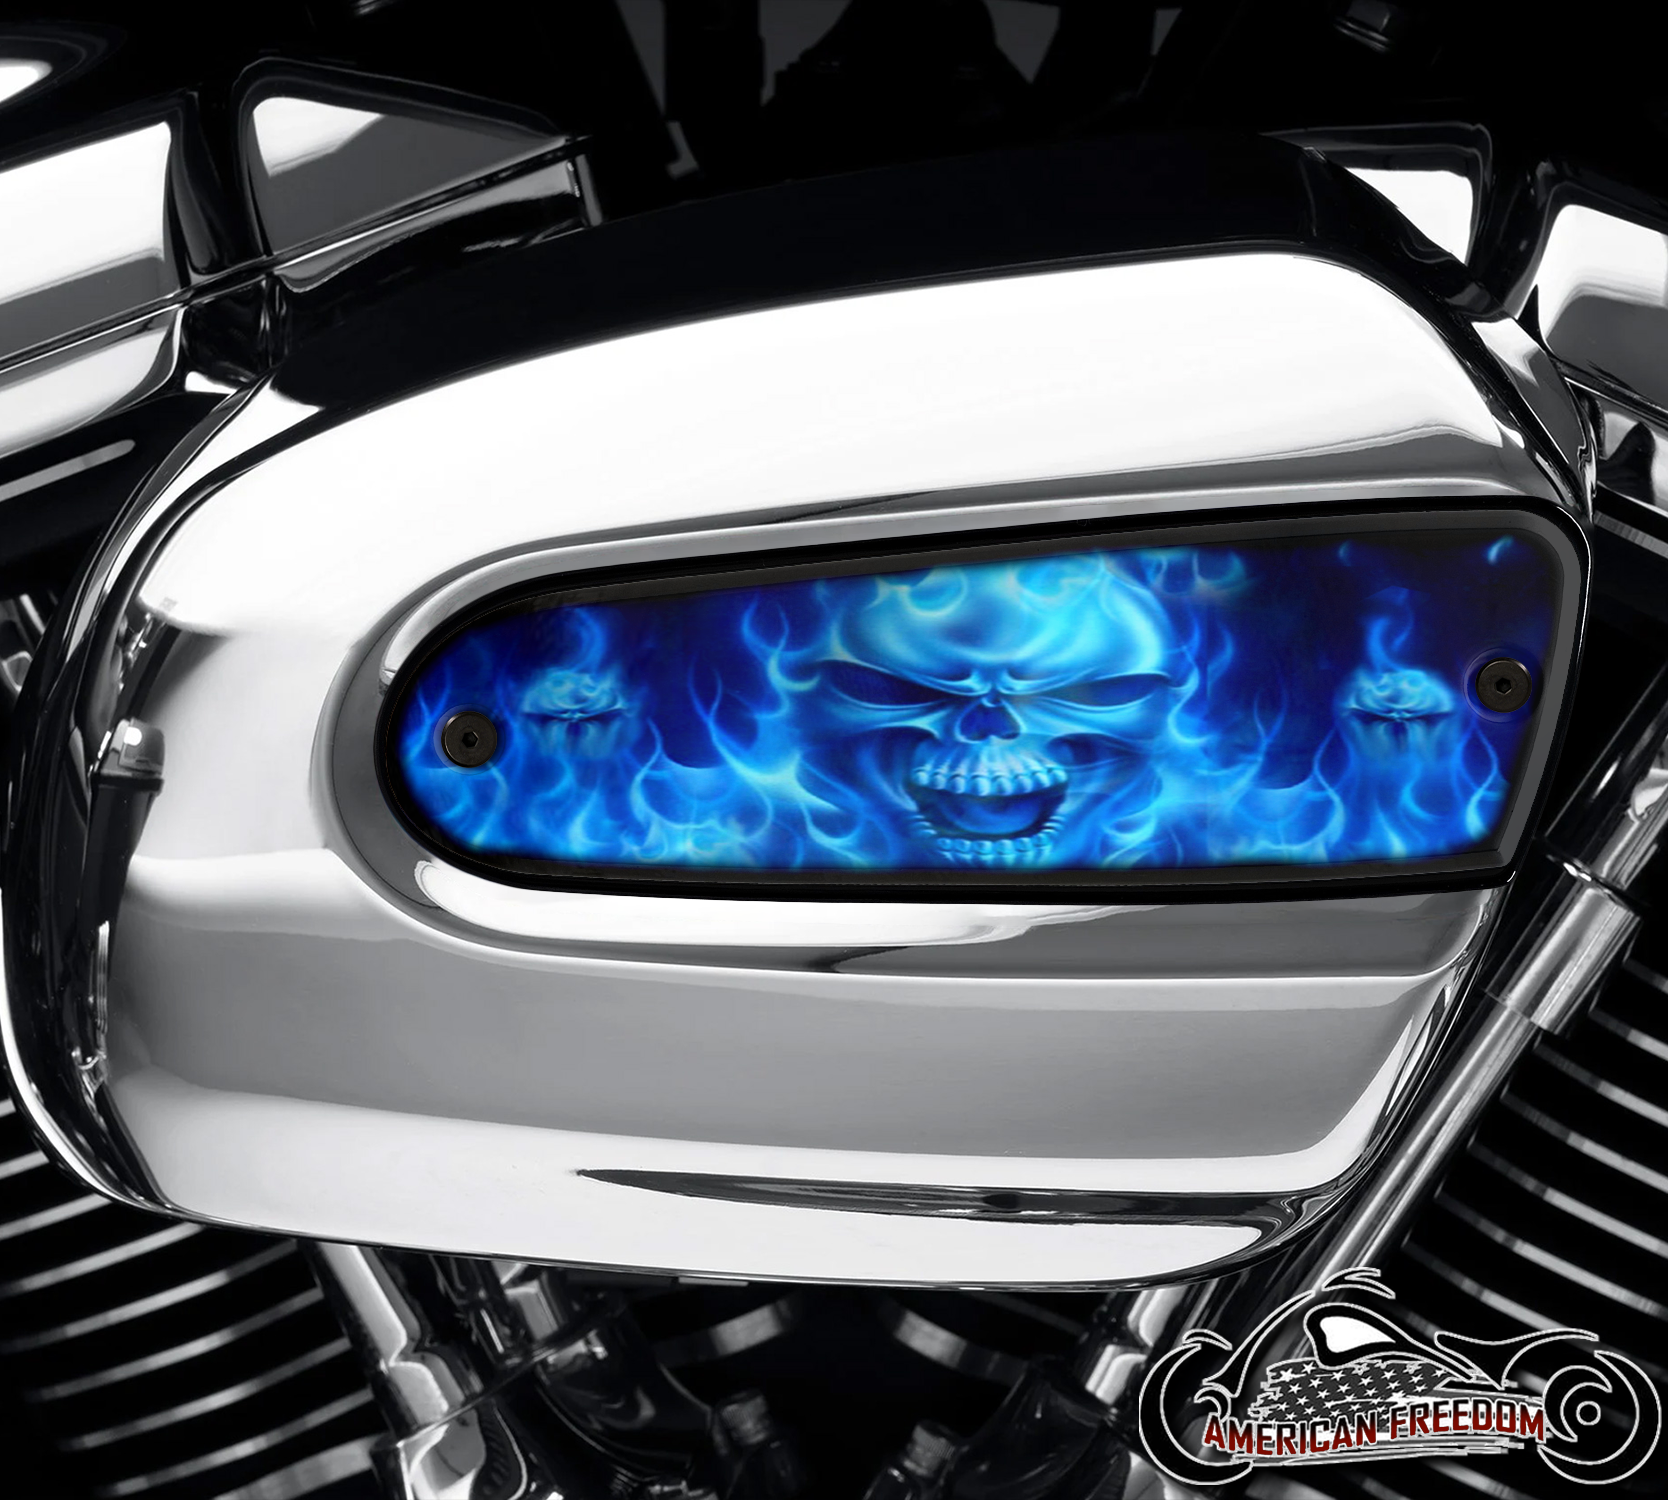 Harley Davidson Wedge Air Cleaner Insert - Blue Flame Skull